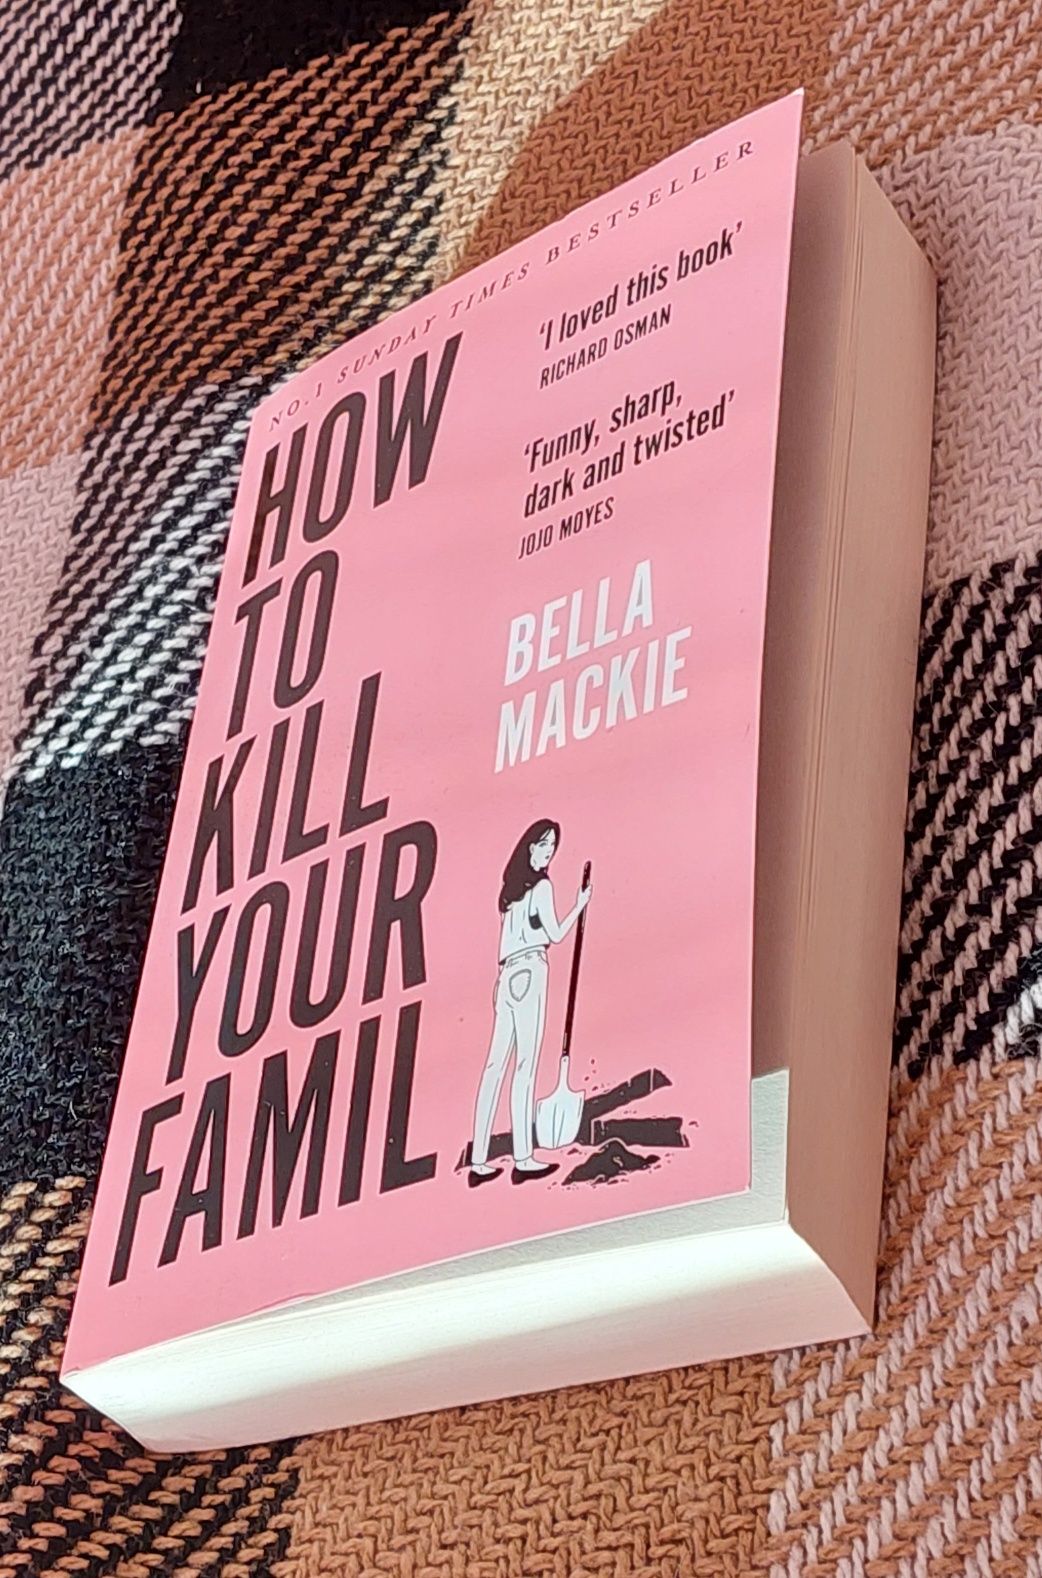 Книга - "How to kill your family"